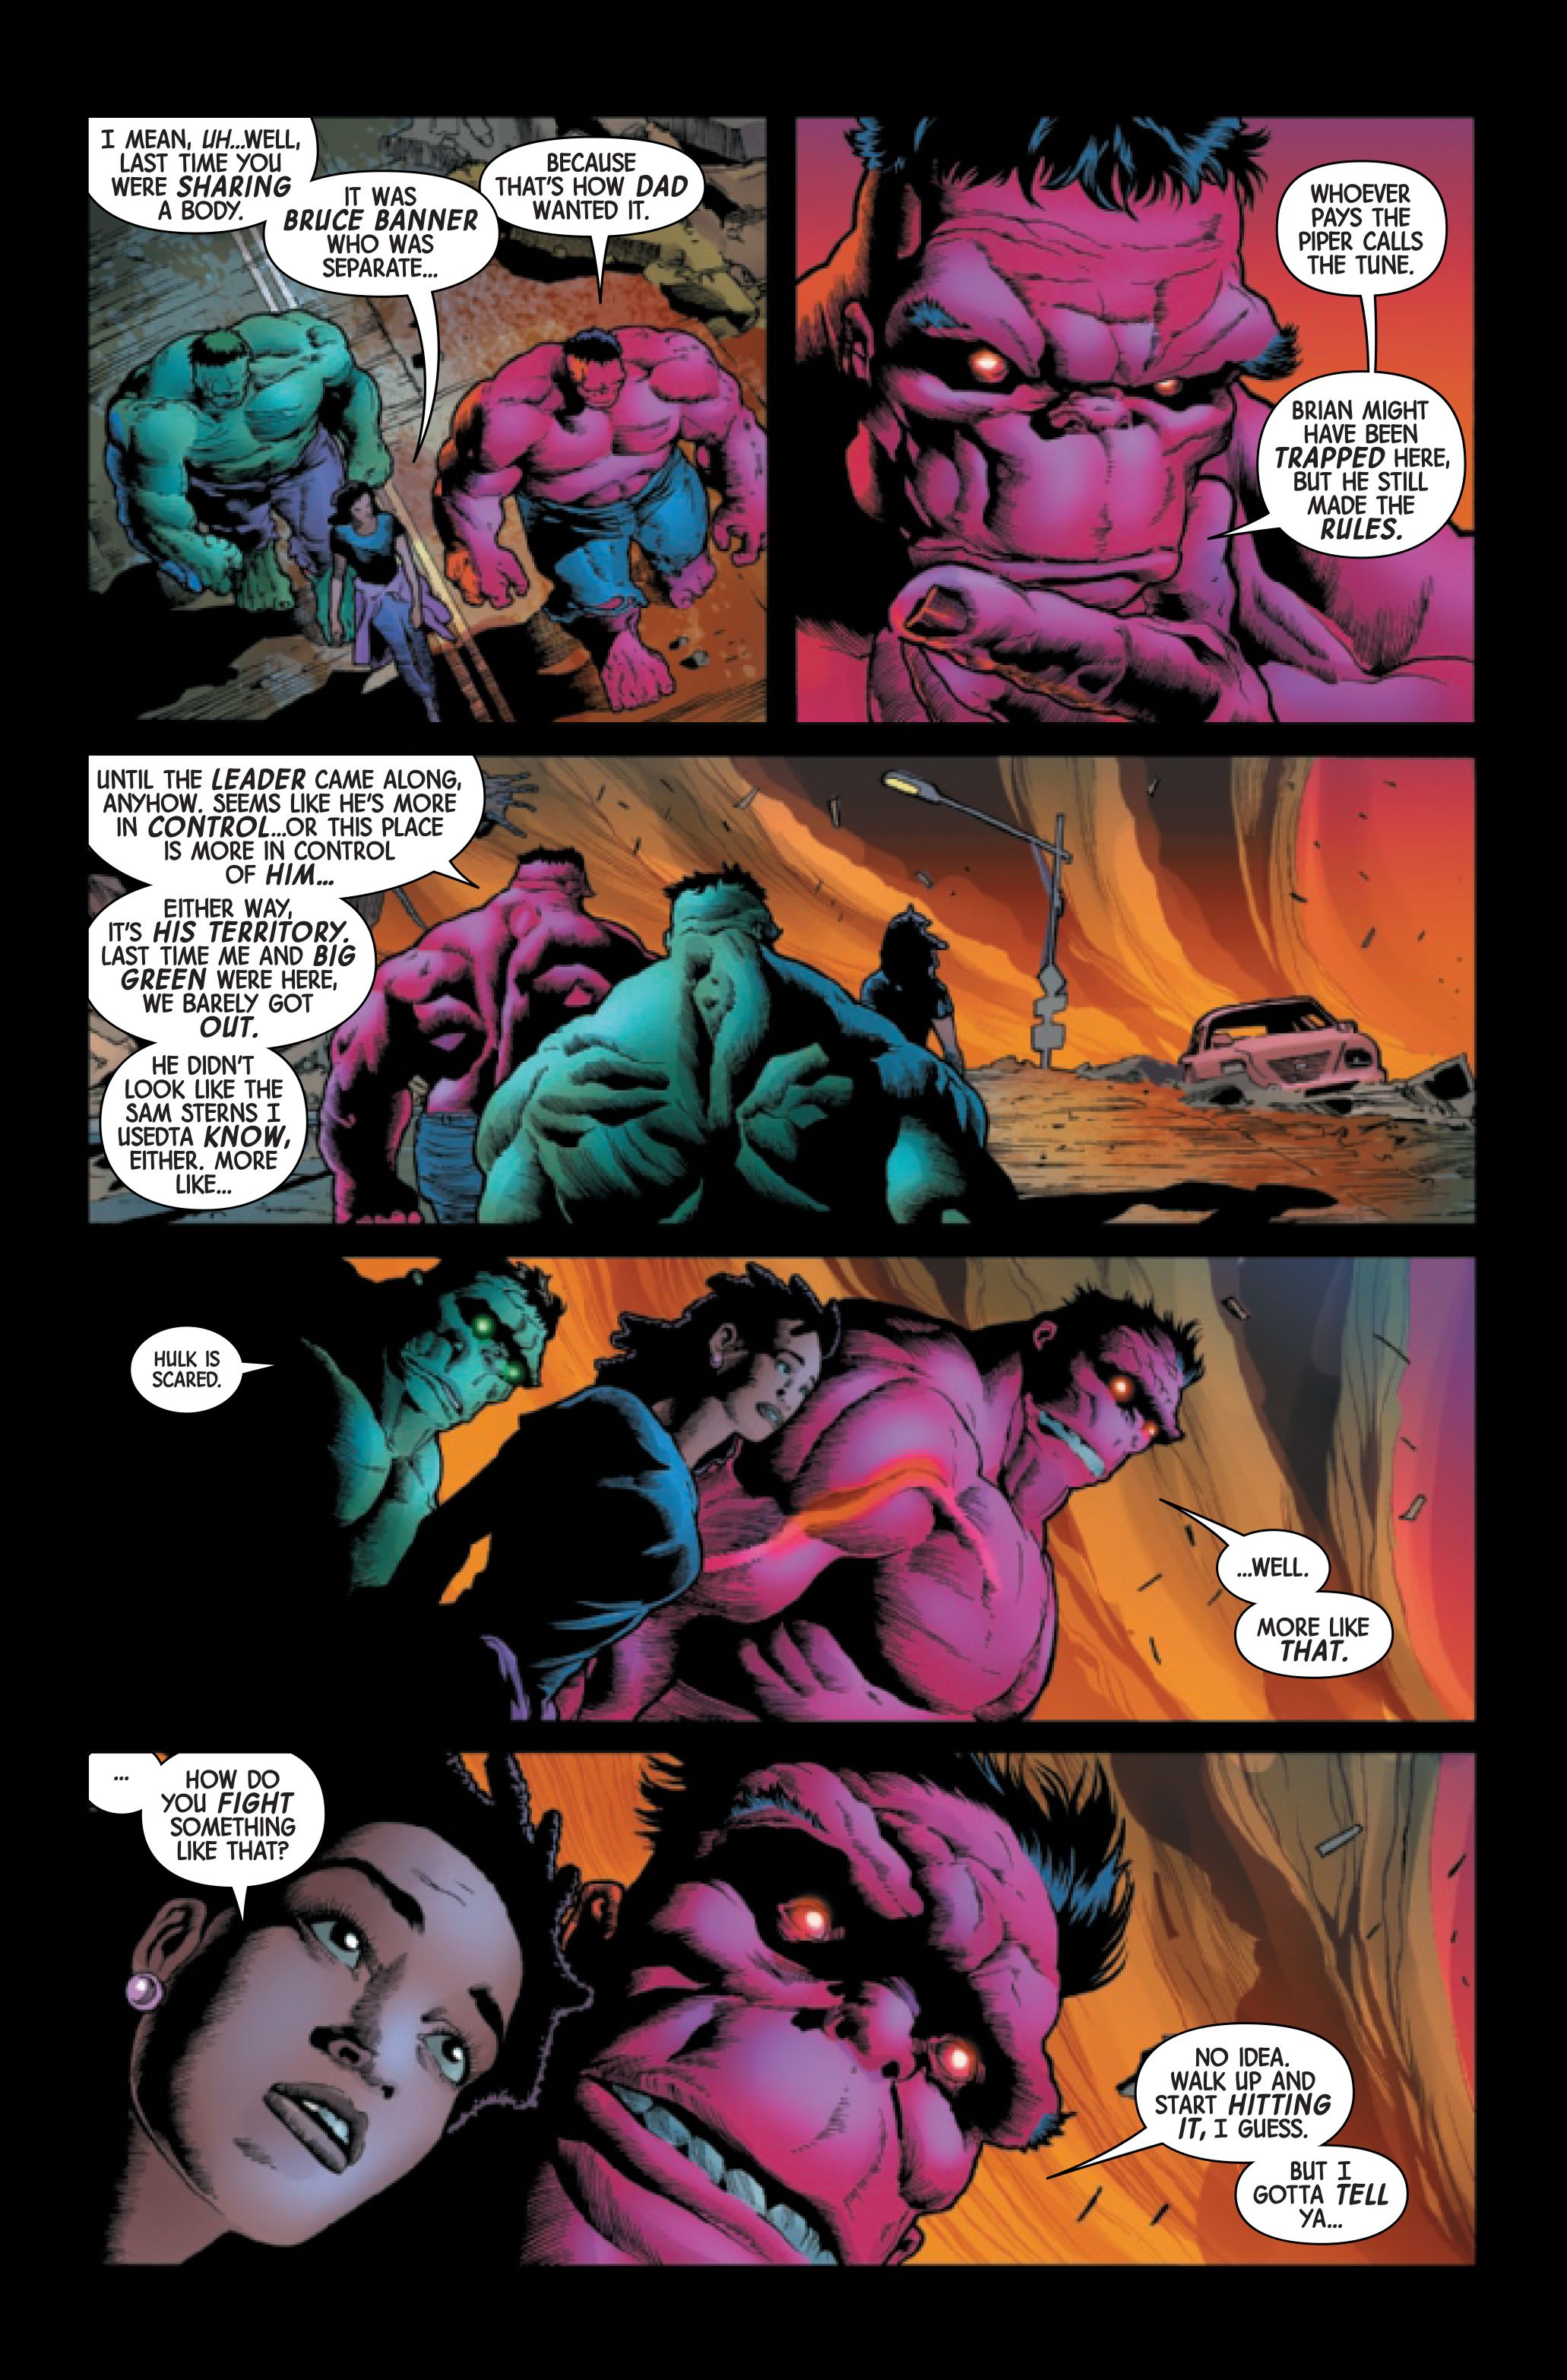 Page 4 of Hulk #50, by Al Ewing and Joe Bennett.